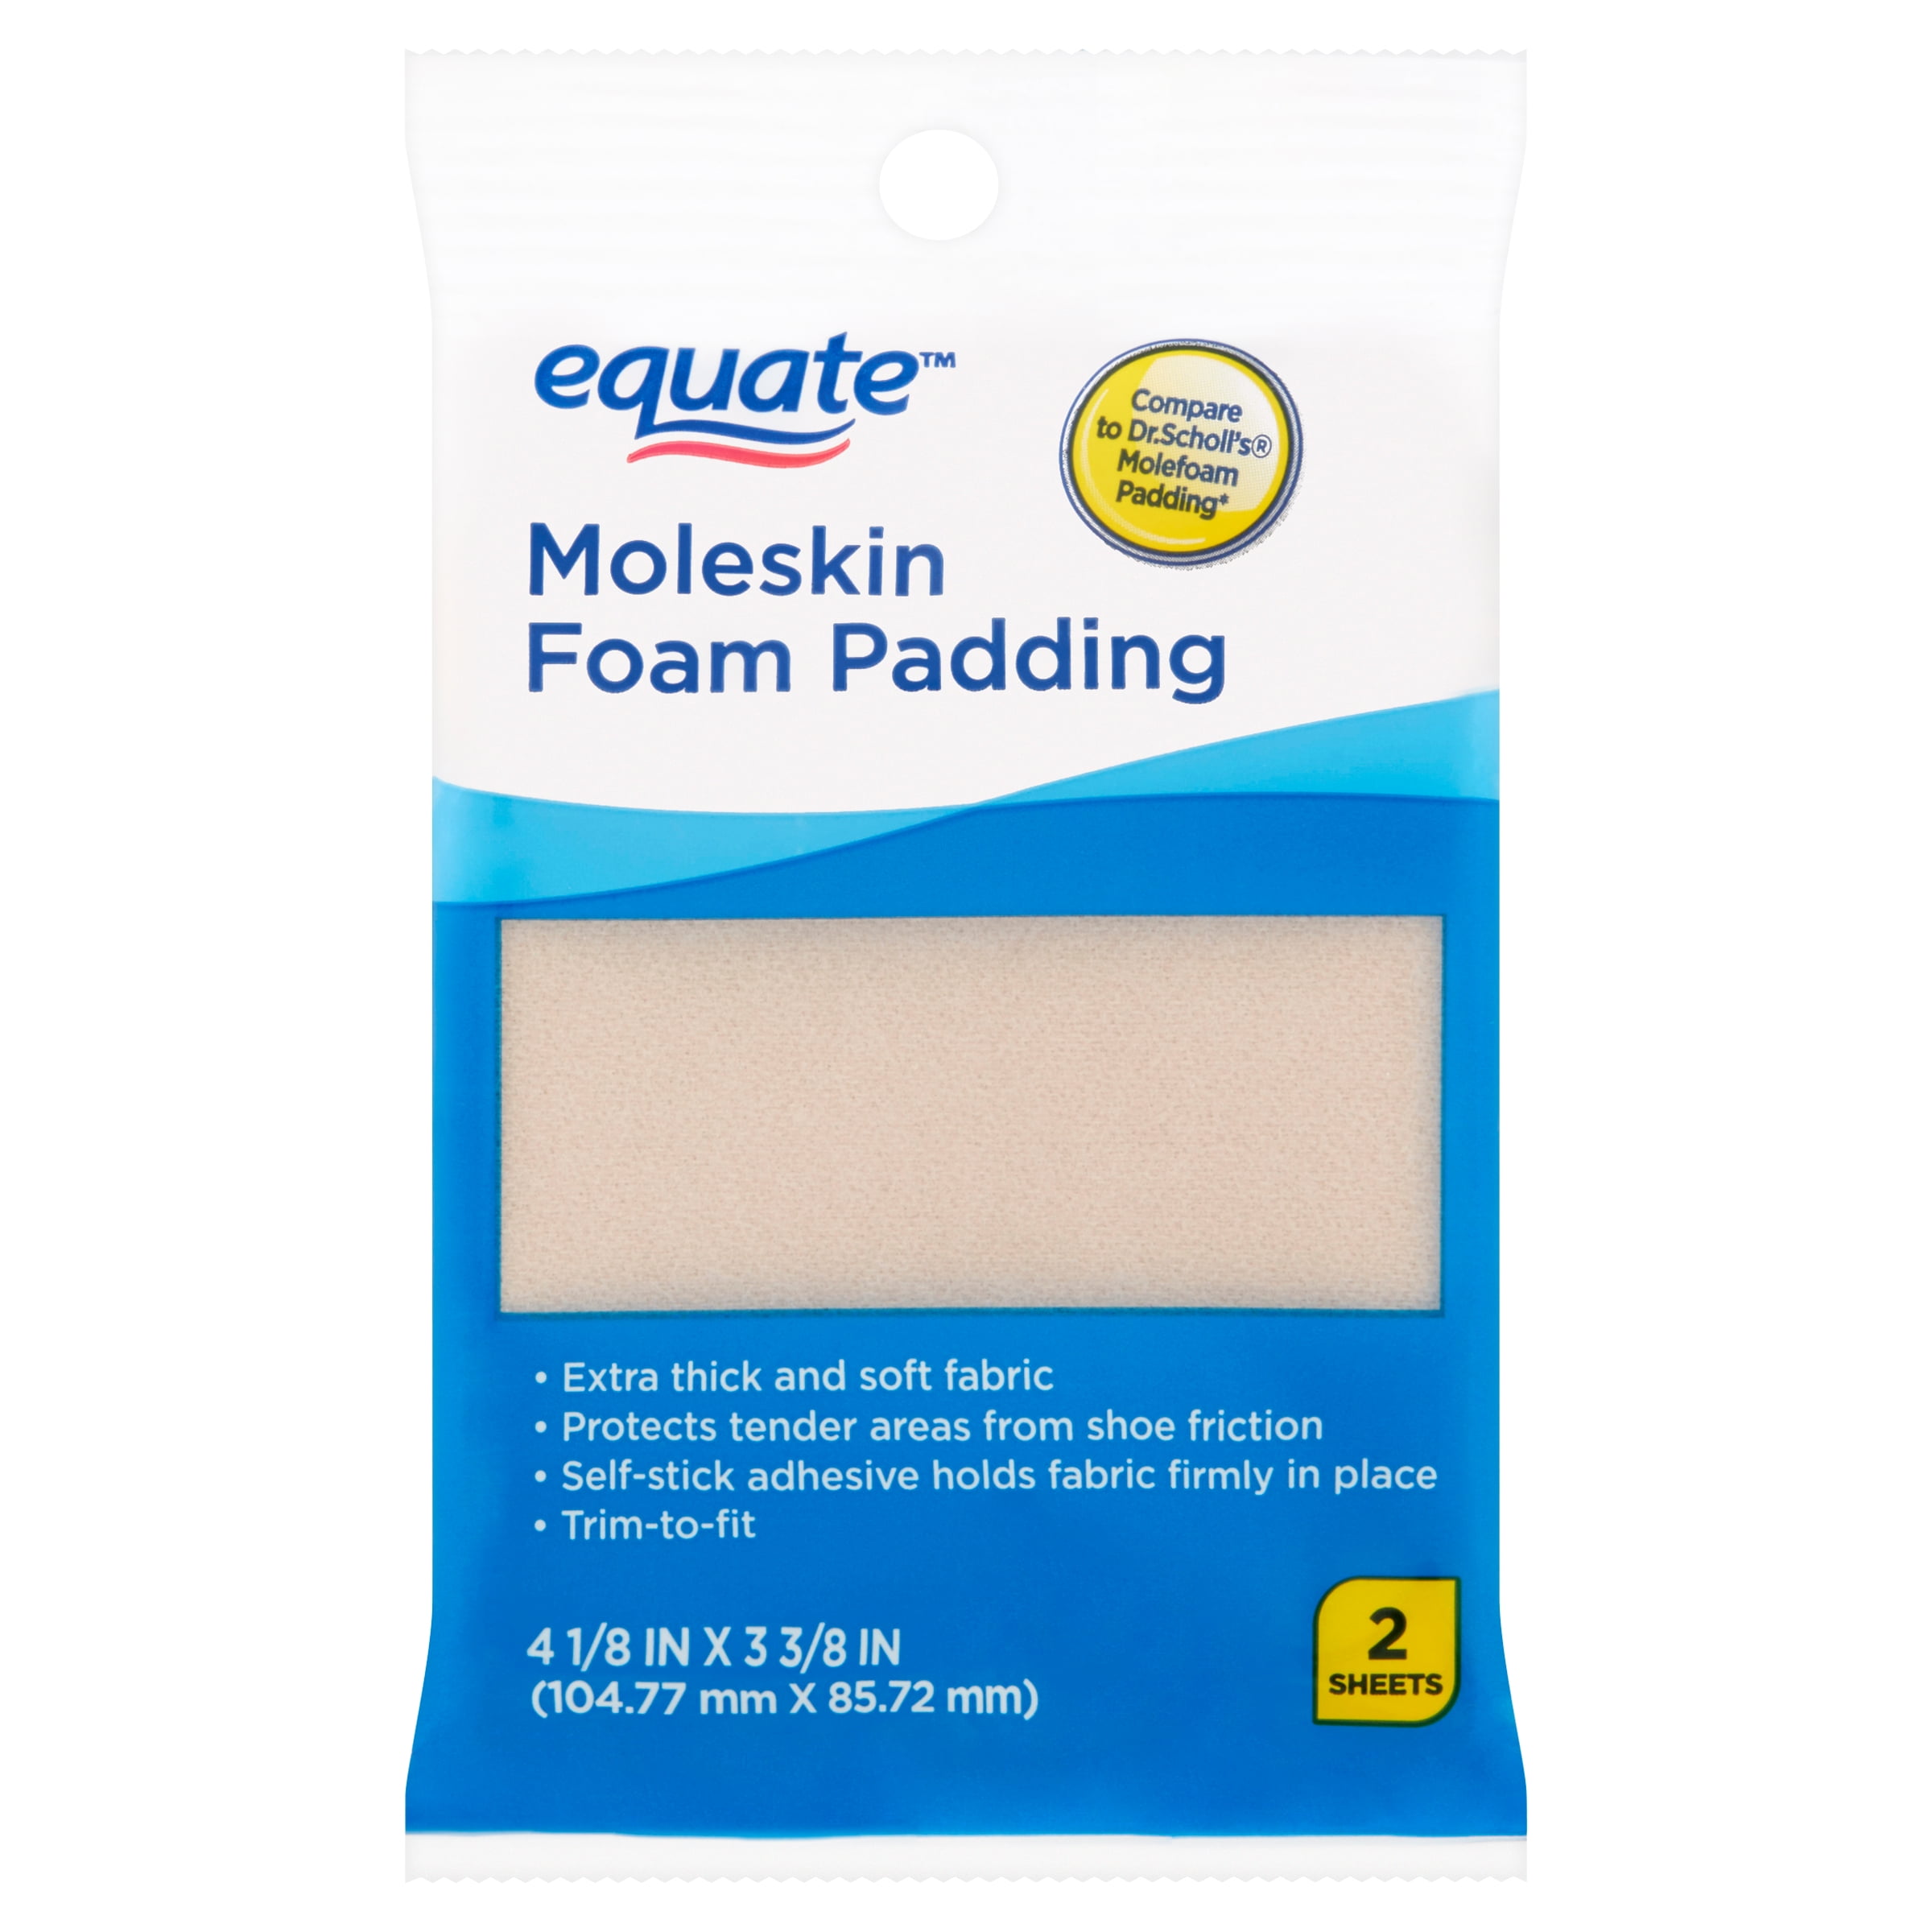 Equate Moleskin Foam Padding, 2 Count 